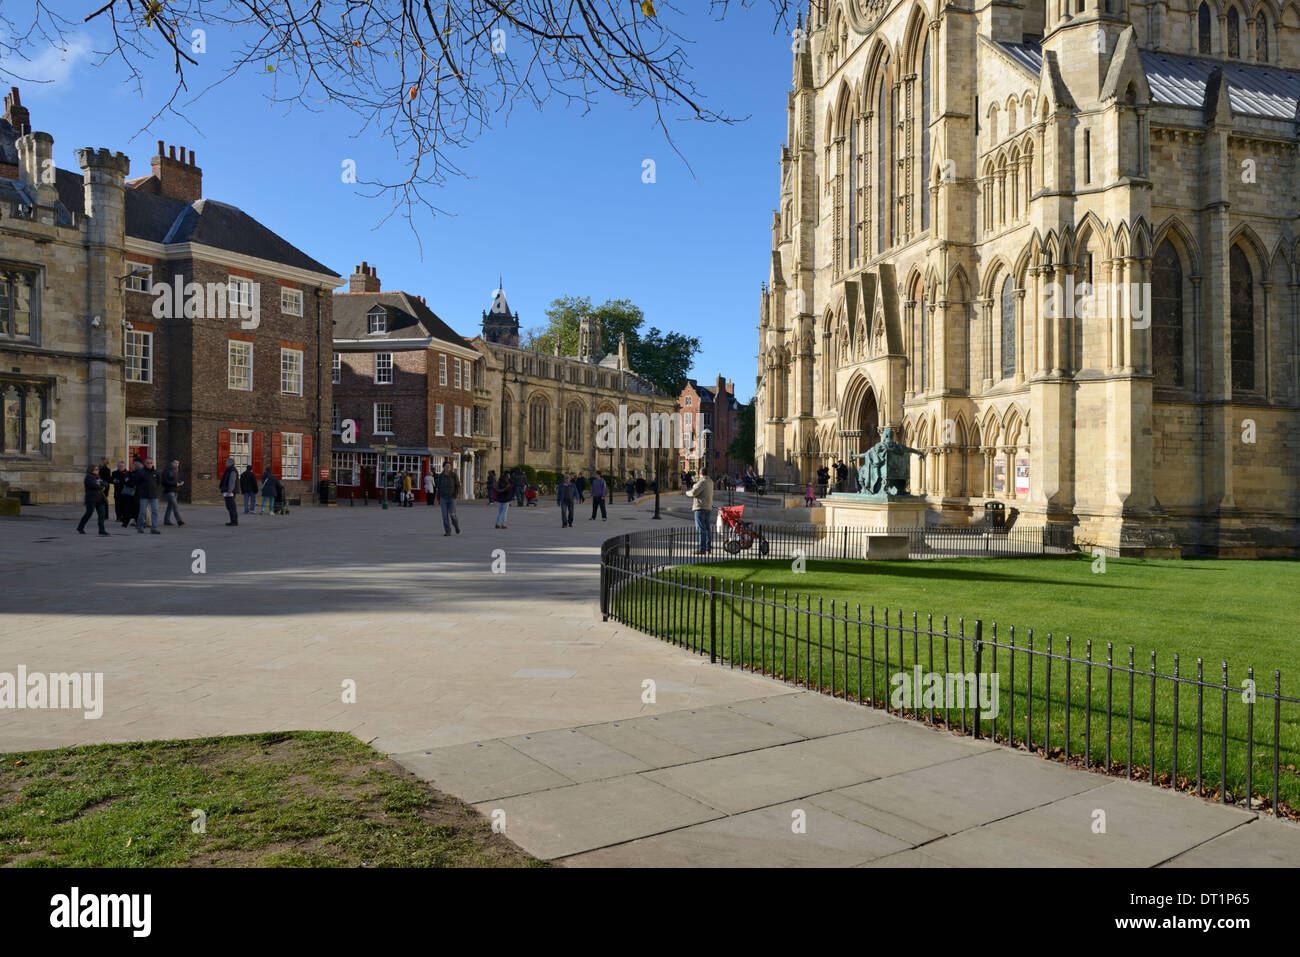 South Piazza, South Transept of York Minster, York, Yorkshire, England, United Kingdom, Europe Stock Photo